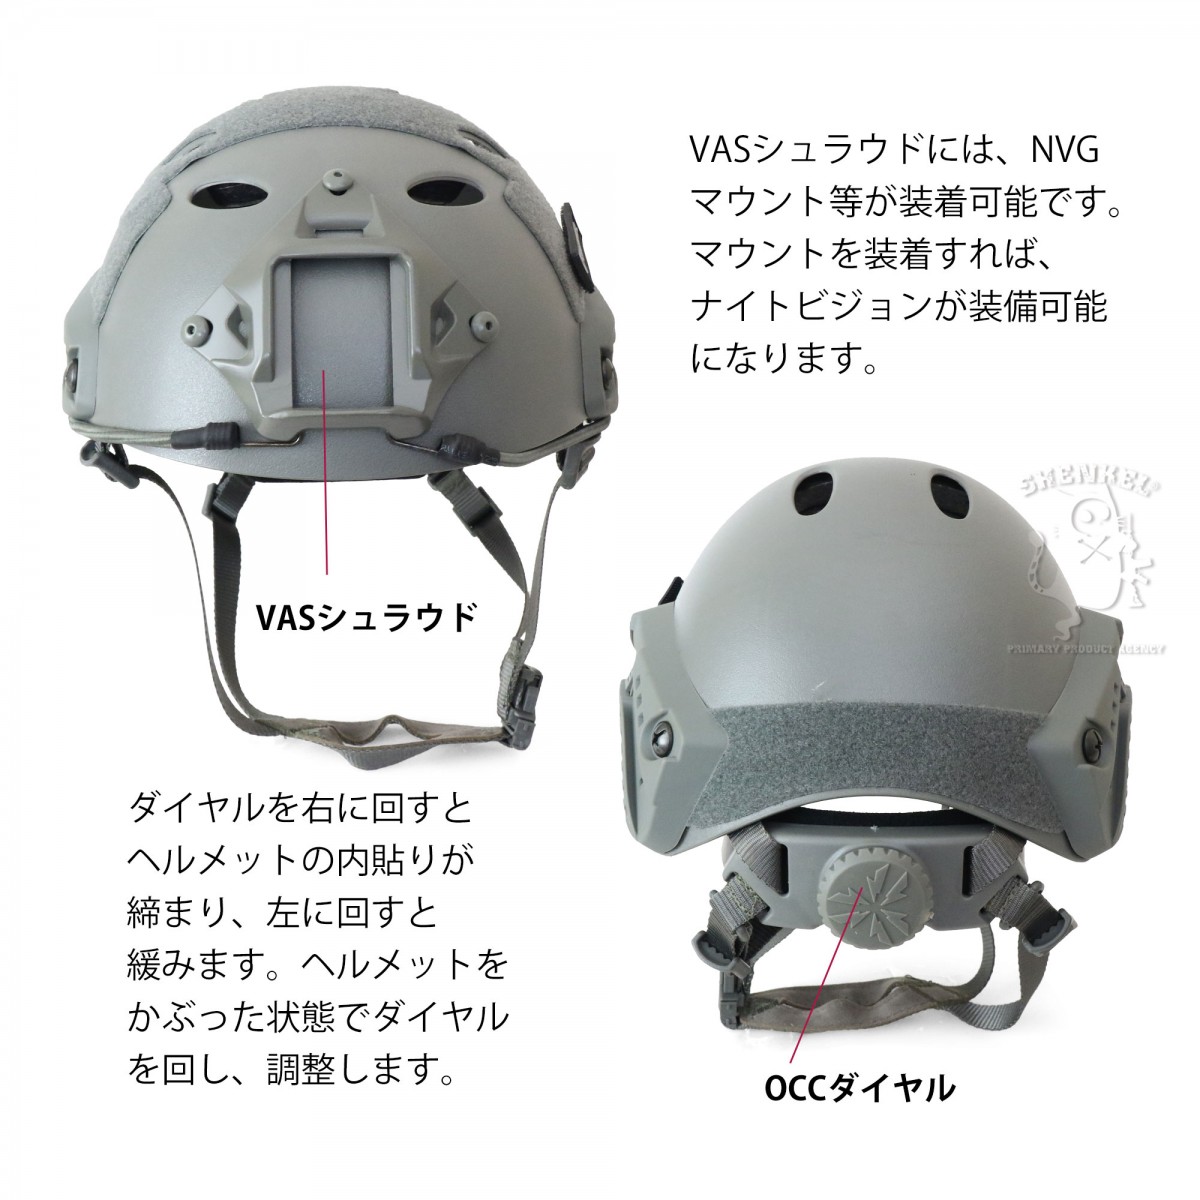 SHENKEL PJタイプ タクティカルヘルメット  4点式あご紐ヘルメット グレー (フォリッジ) レプリカ 米軍装備 サバゲー